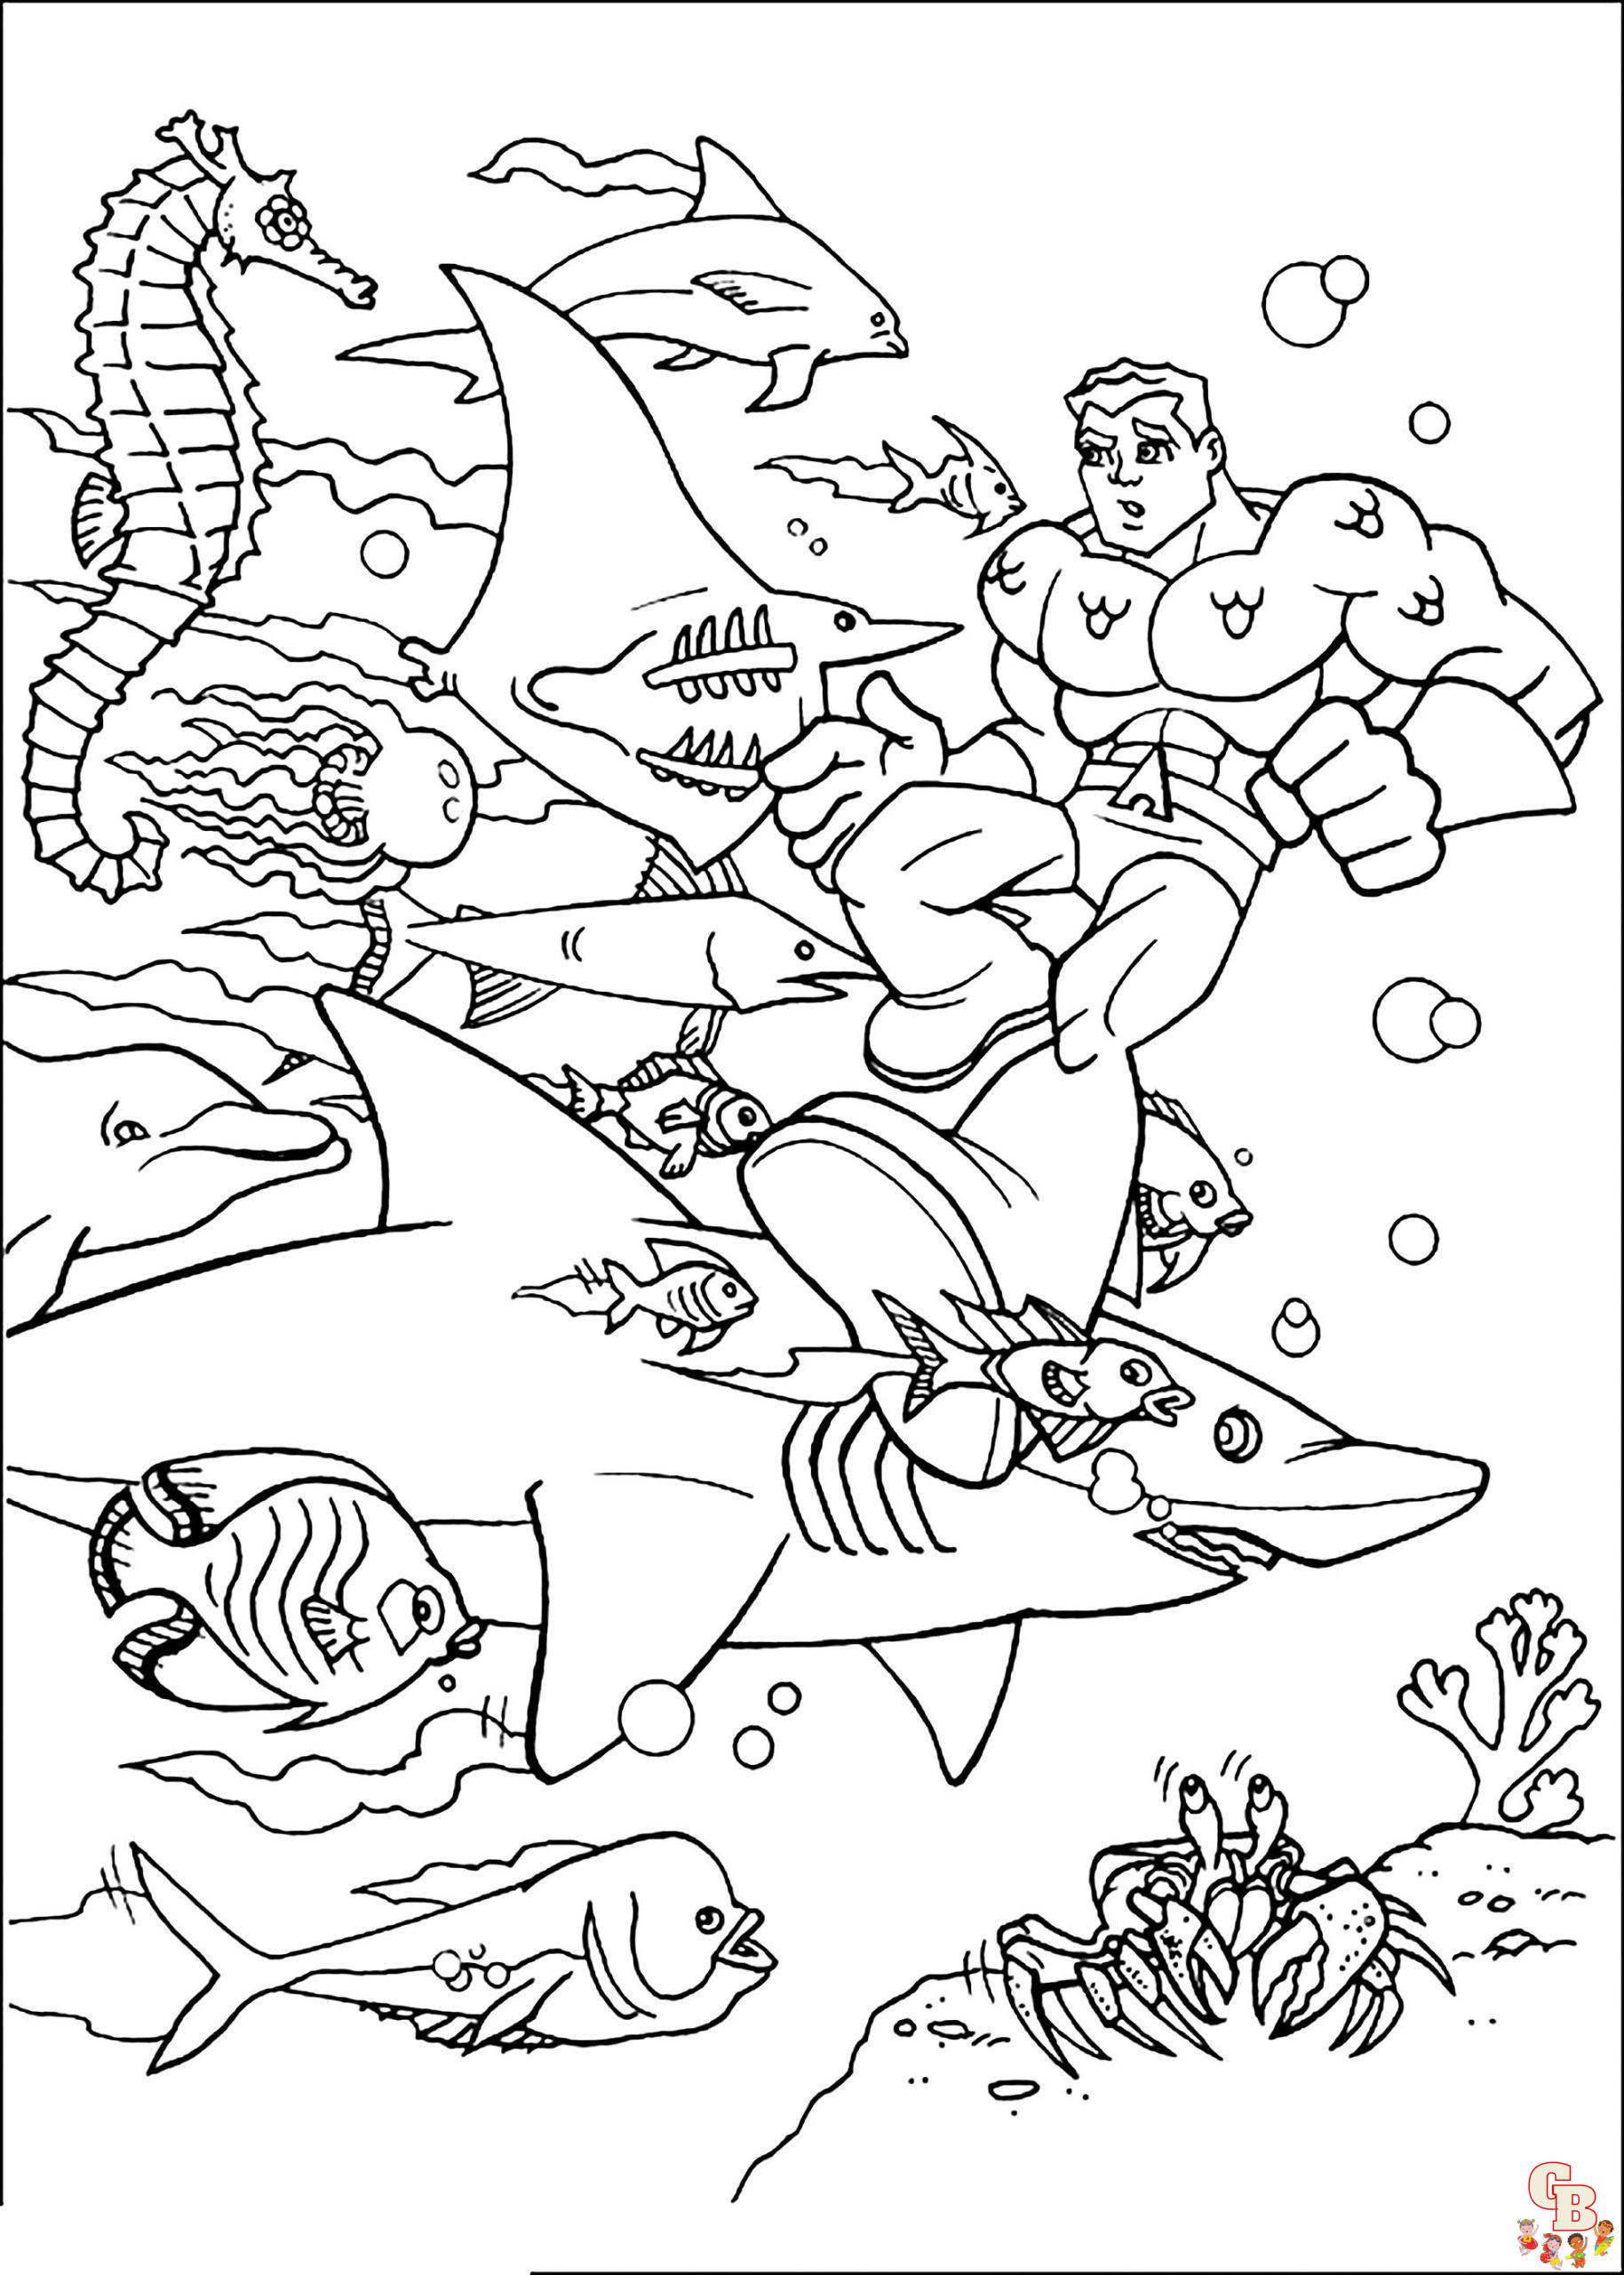 Aquaman boyama sayfası